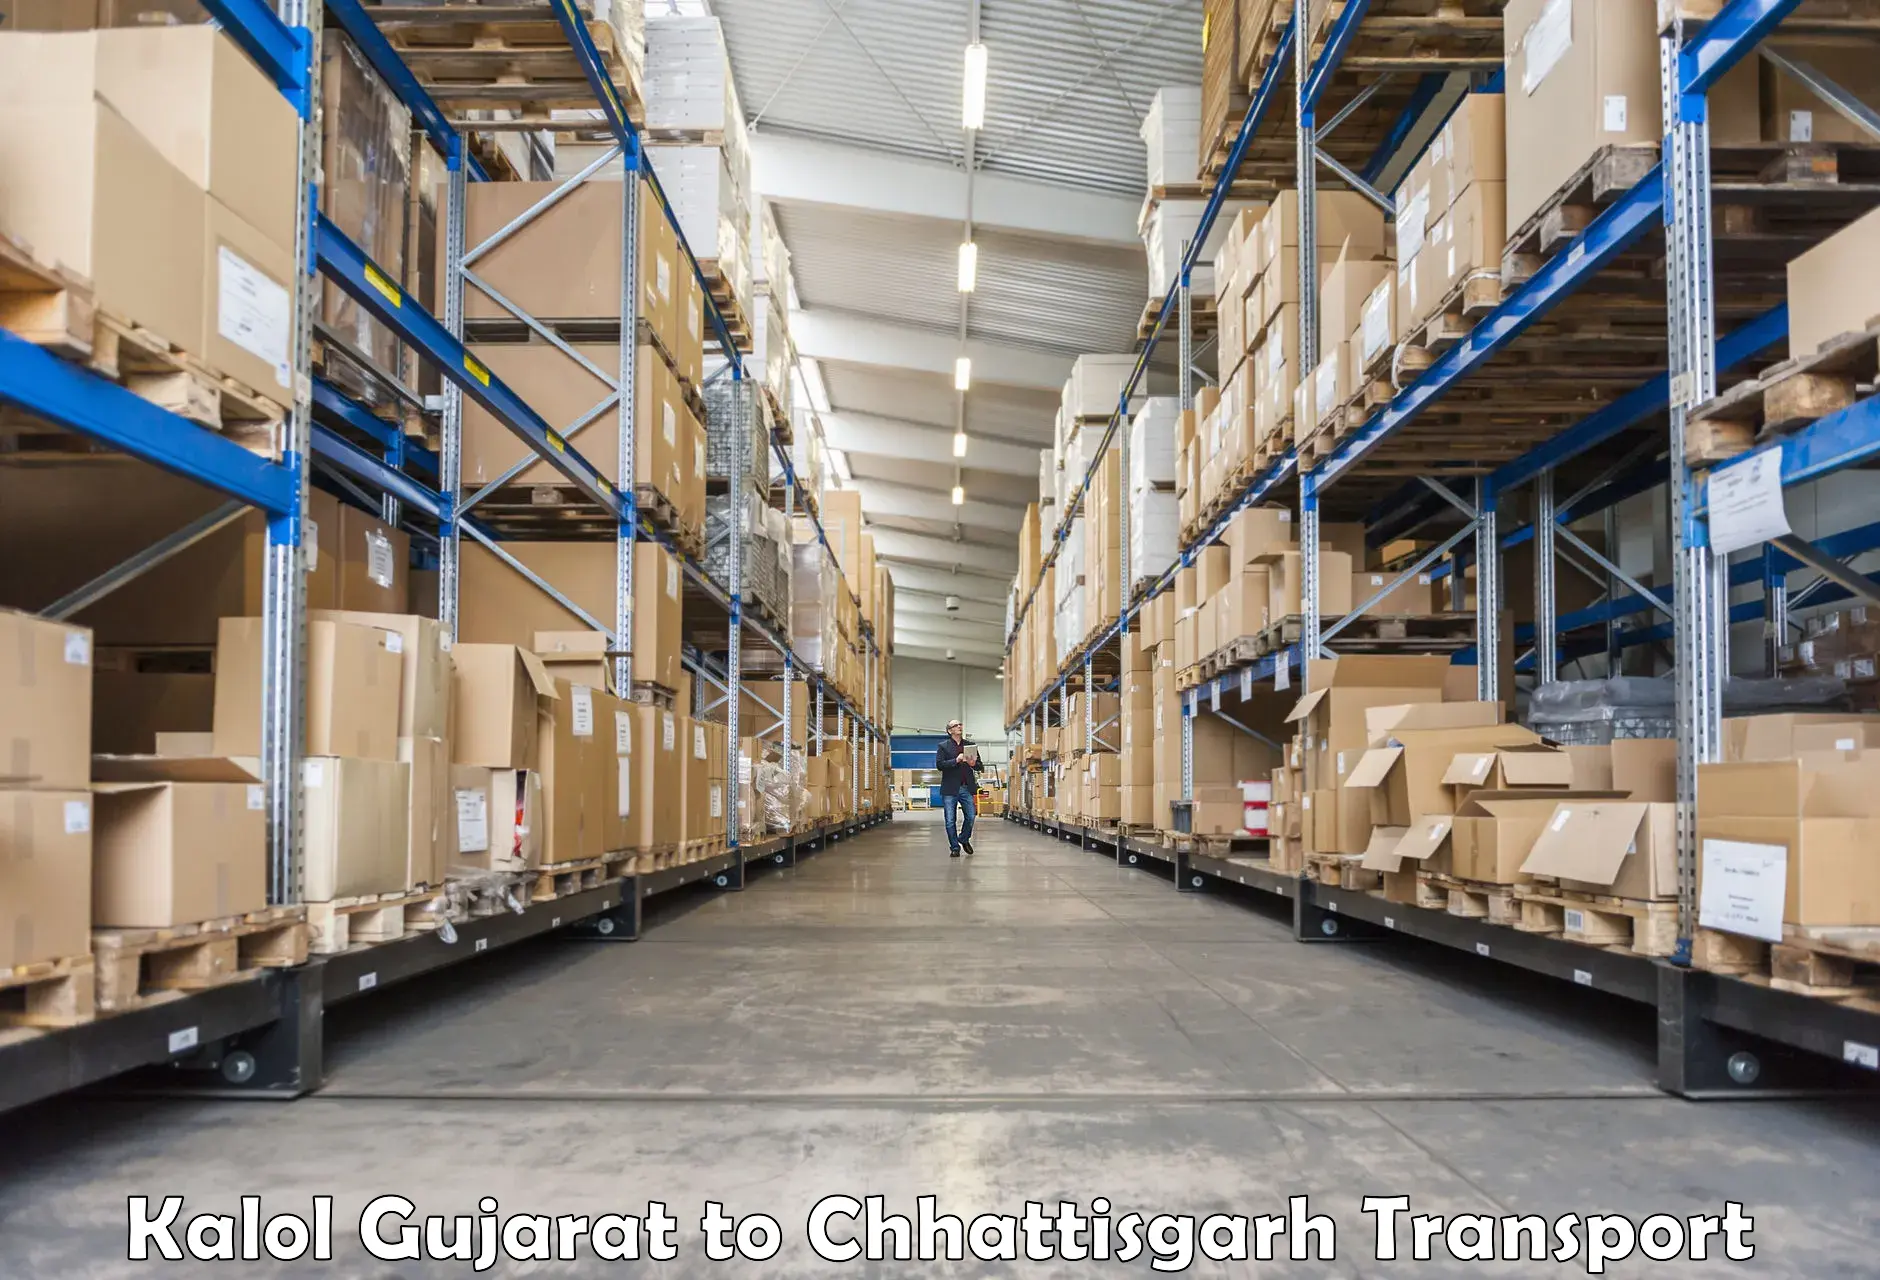 Daily parcel service transport Kalol Gujarat to Raipur